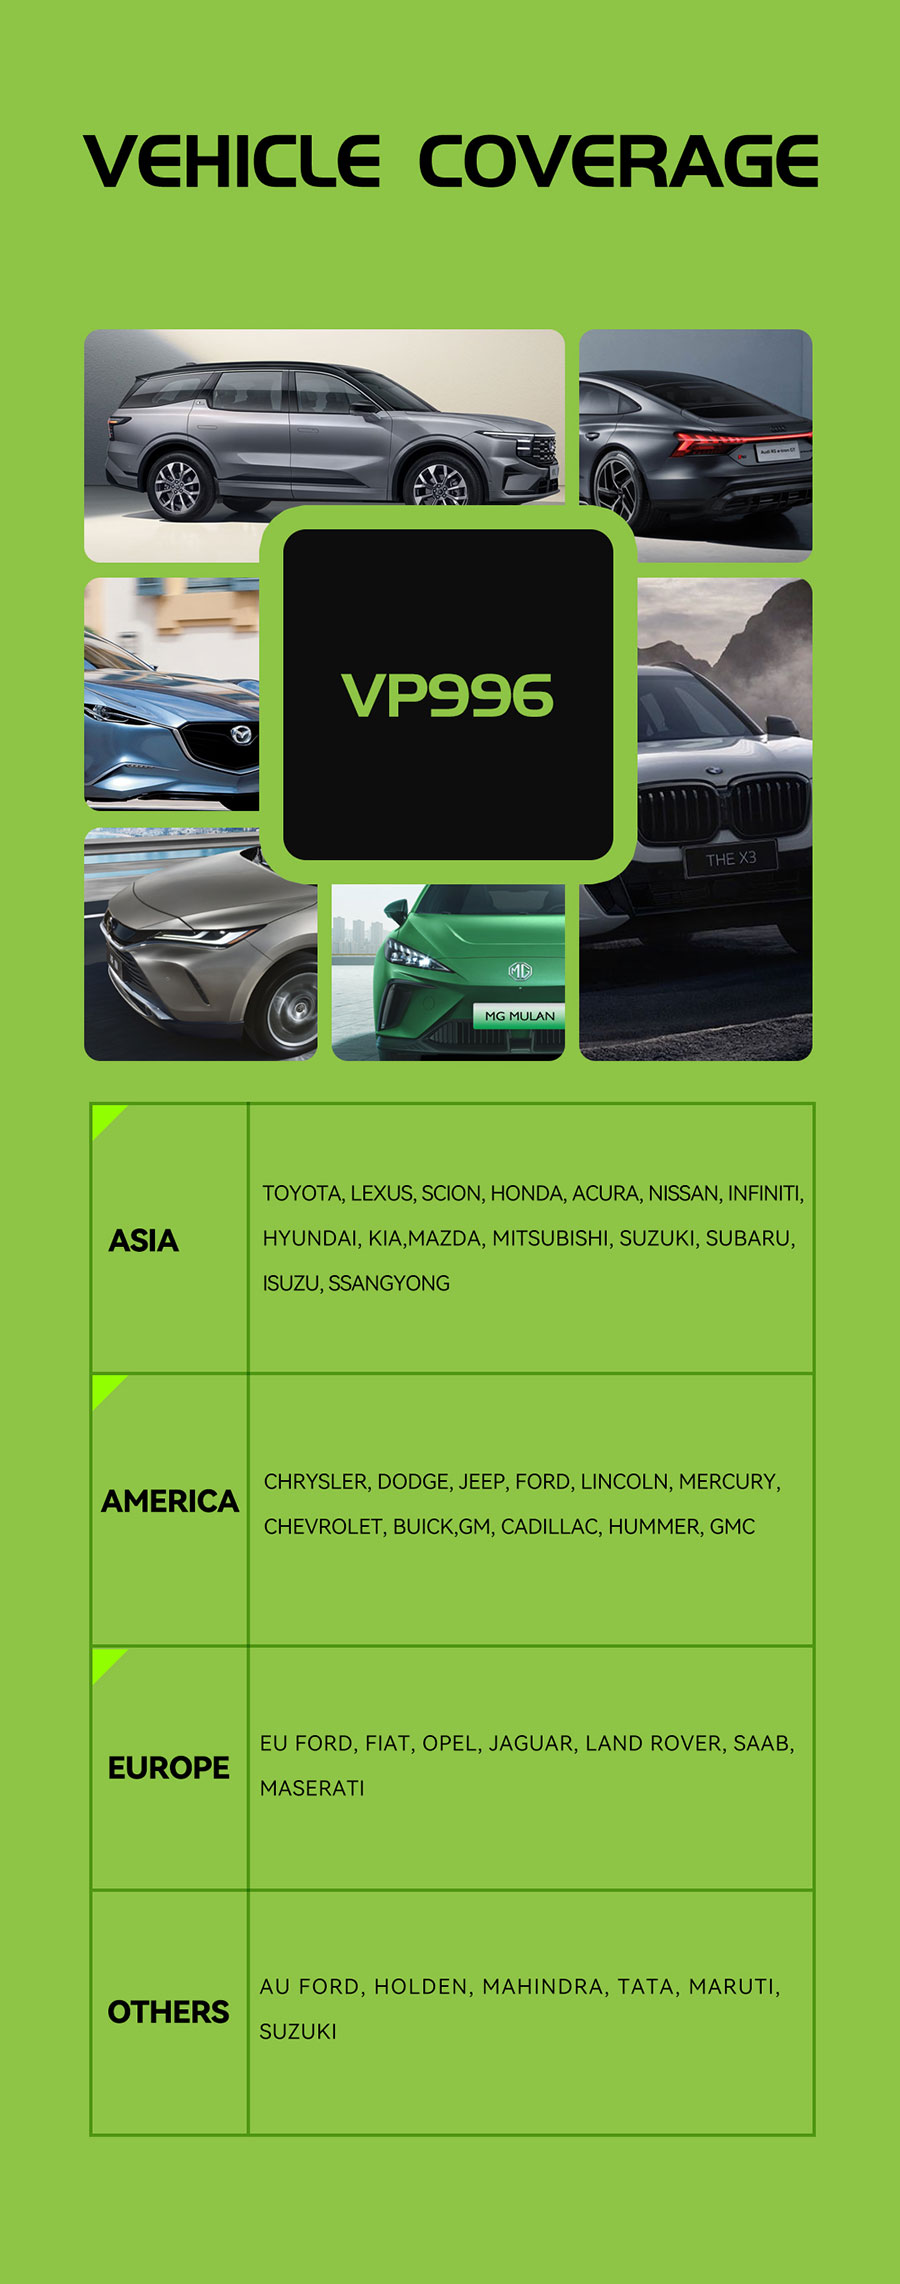 vp996-vehicle-coverage